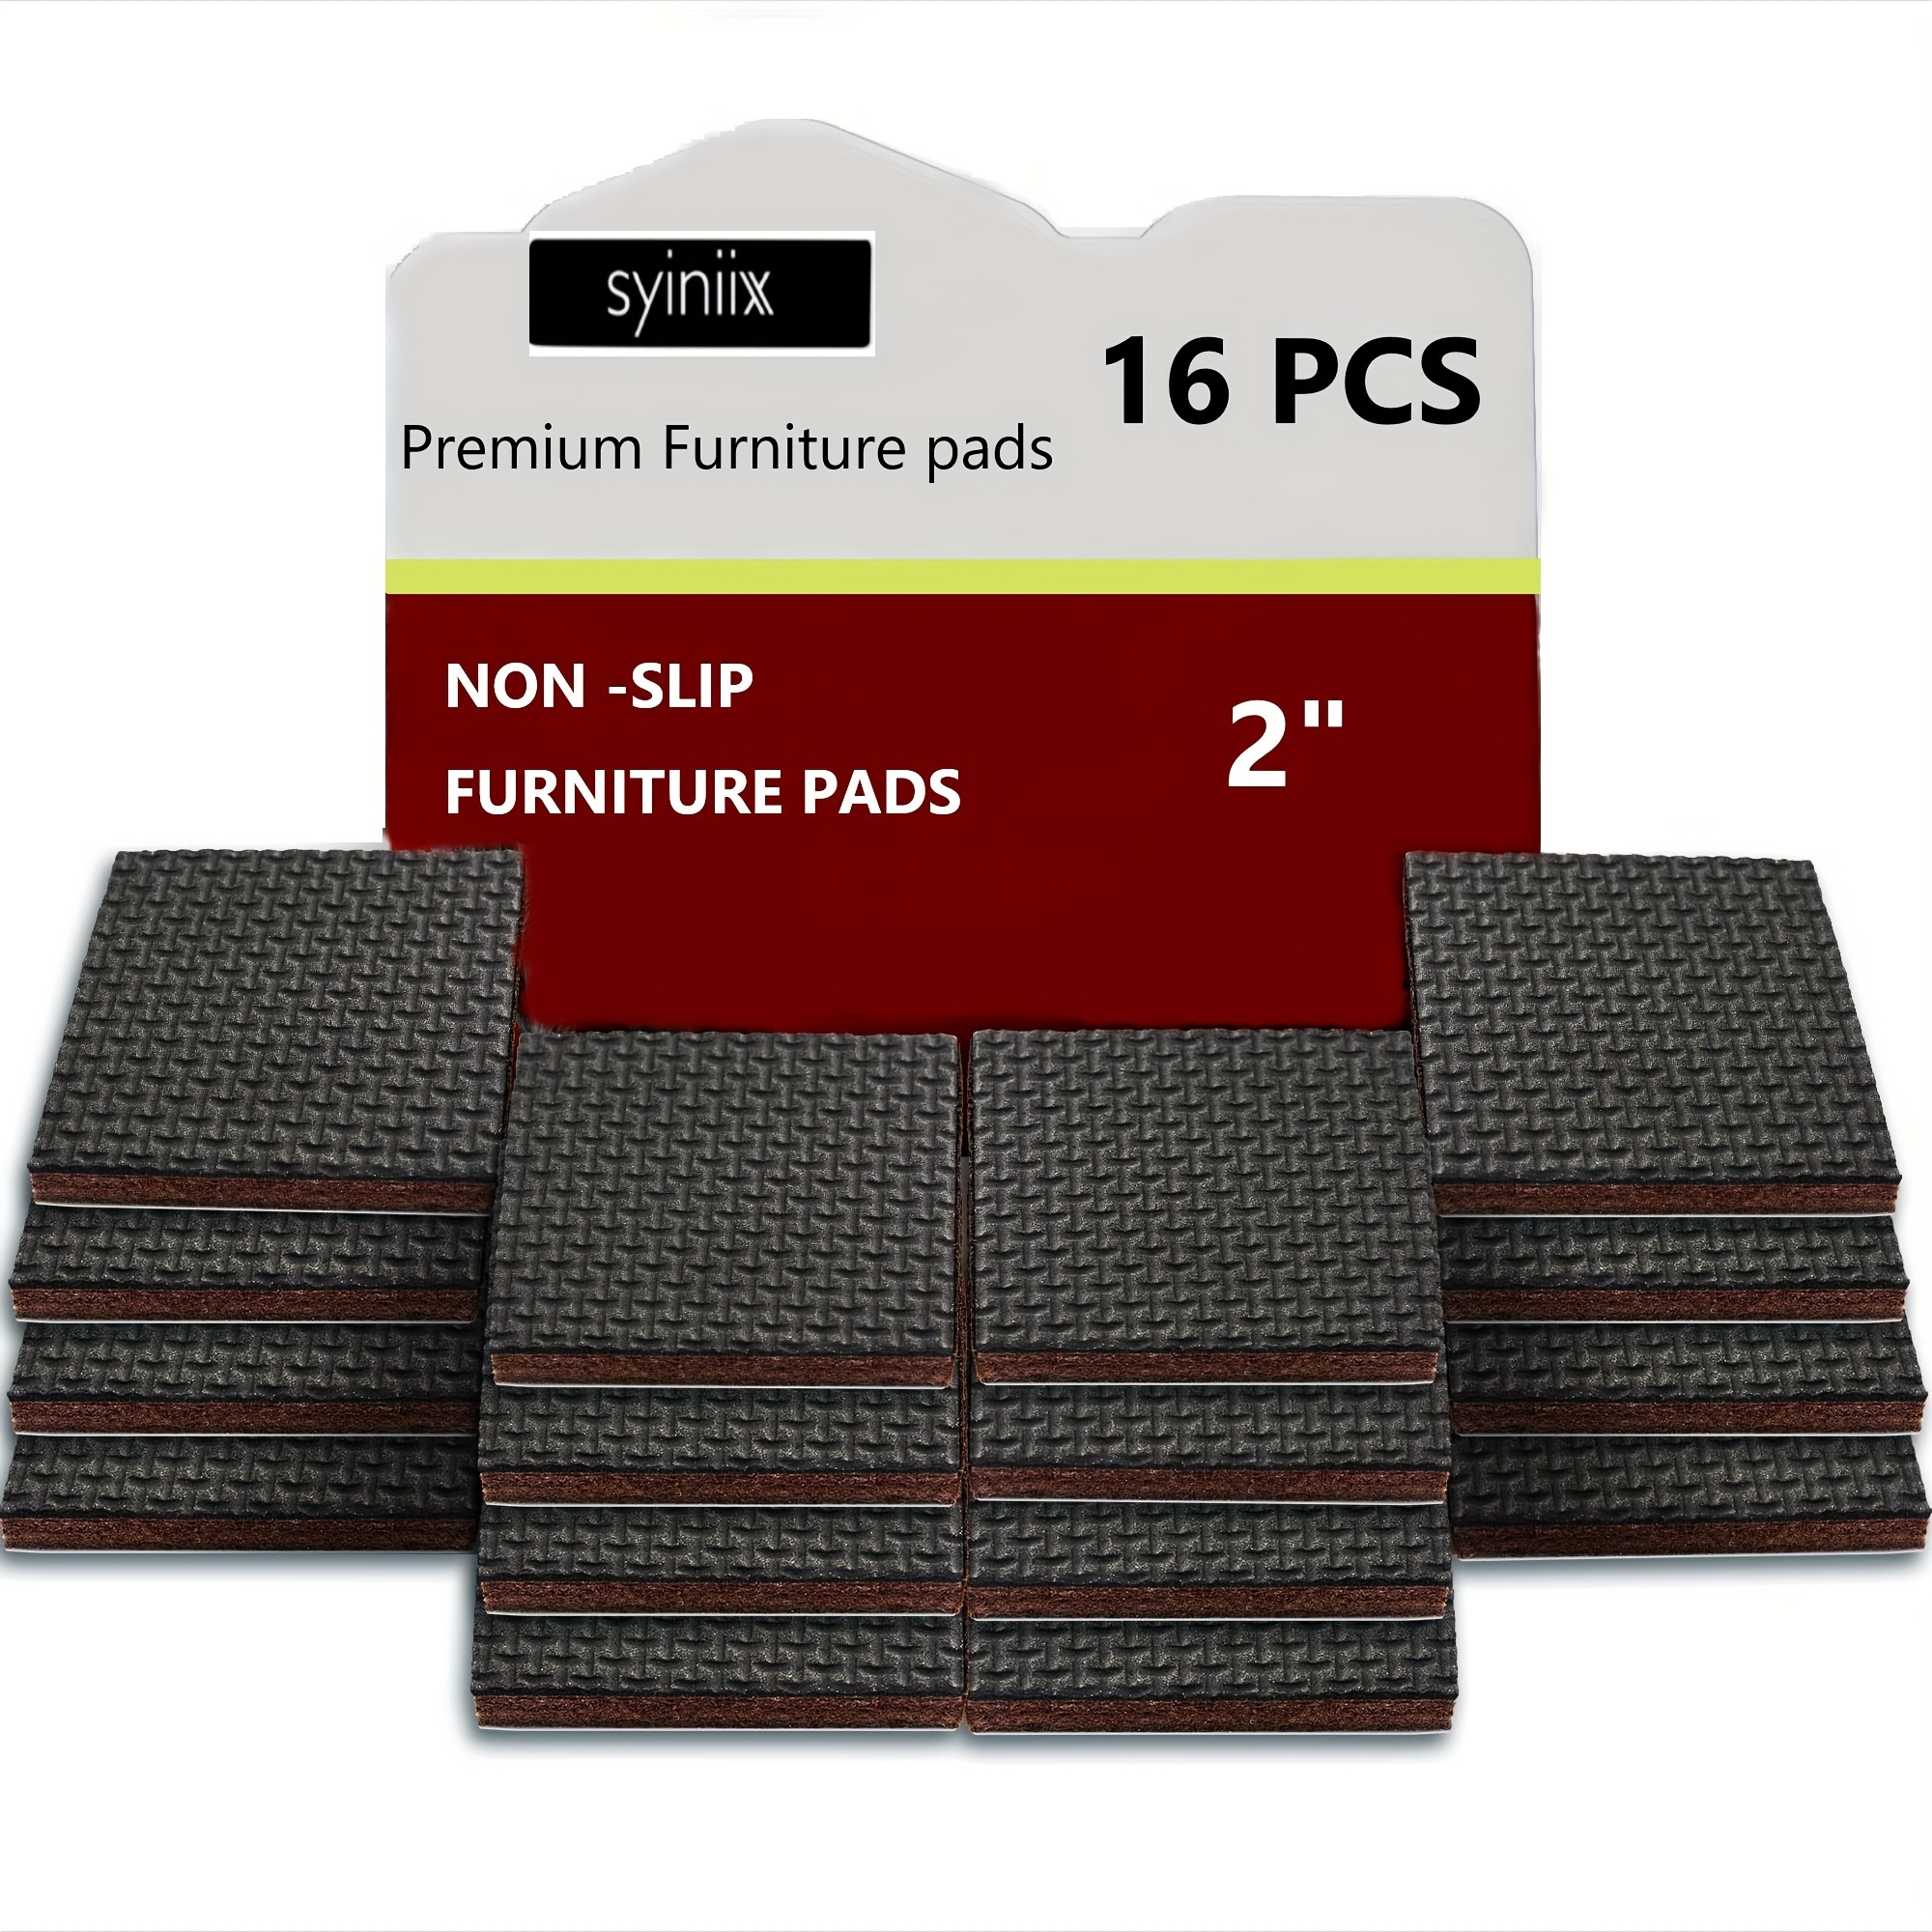 Non Slip Furniture Pads - 16 Floor Protectors